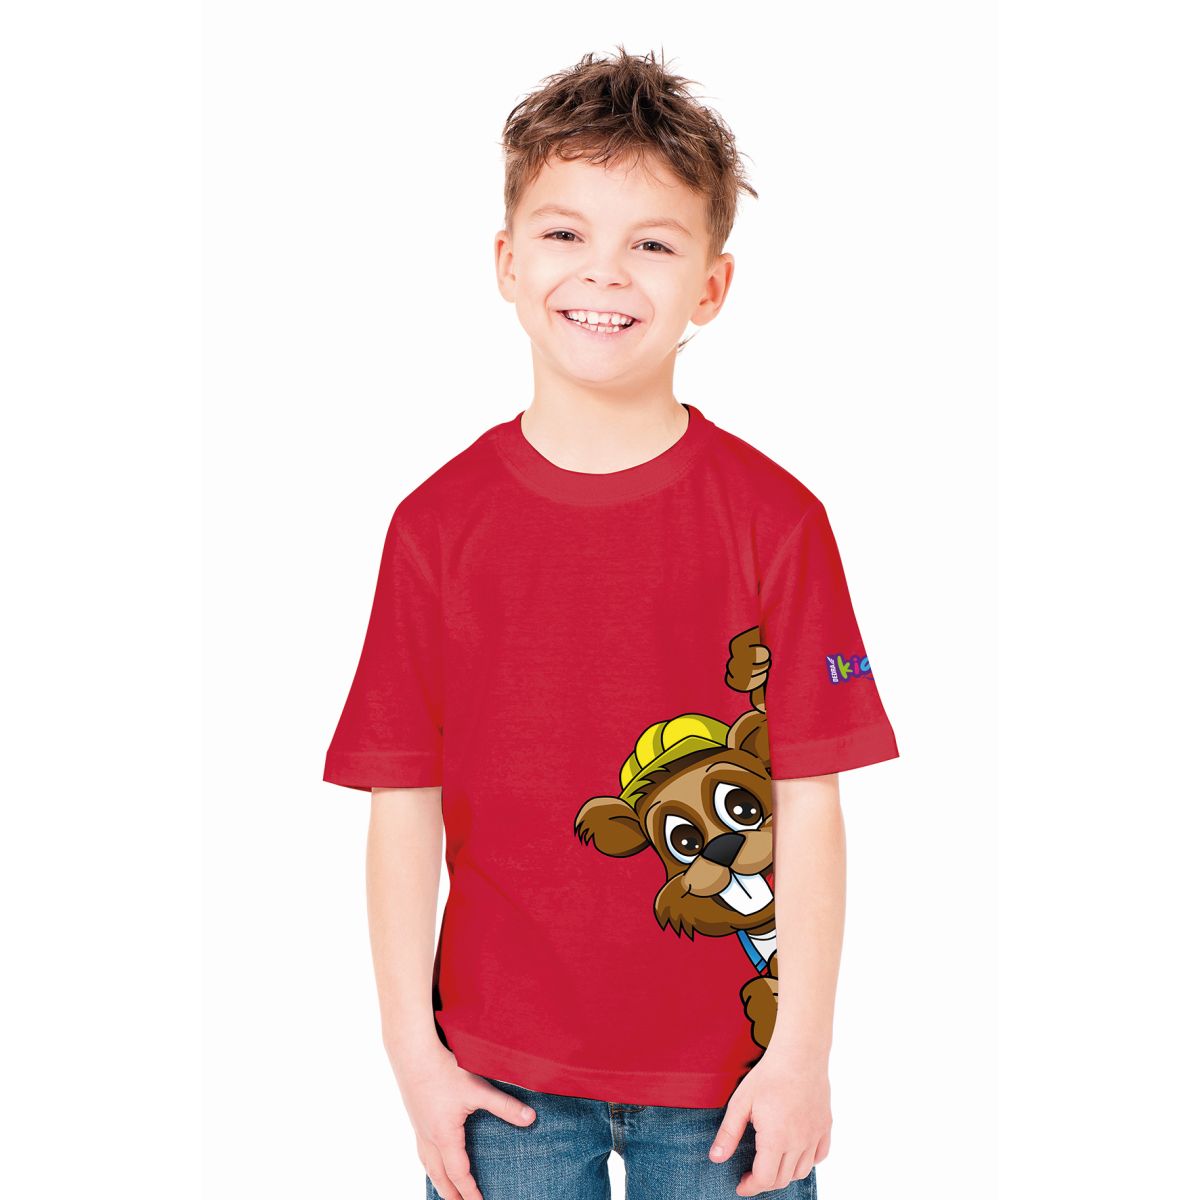 Dětské tričko DEDRUŚ červené, vel. 4/110cm, 100% bavlna DEDRA BH5TKC-4